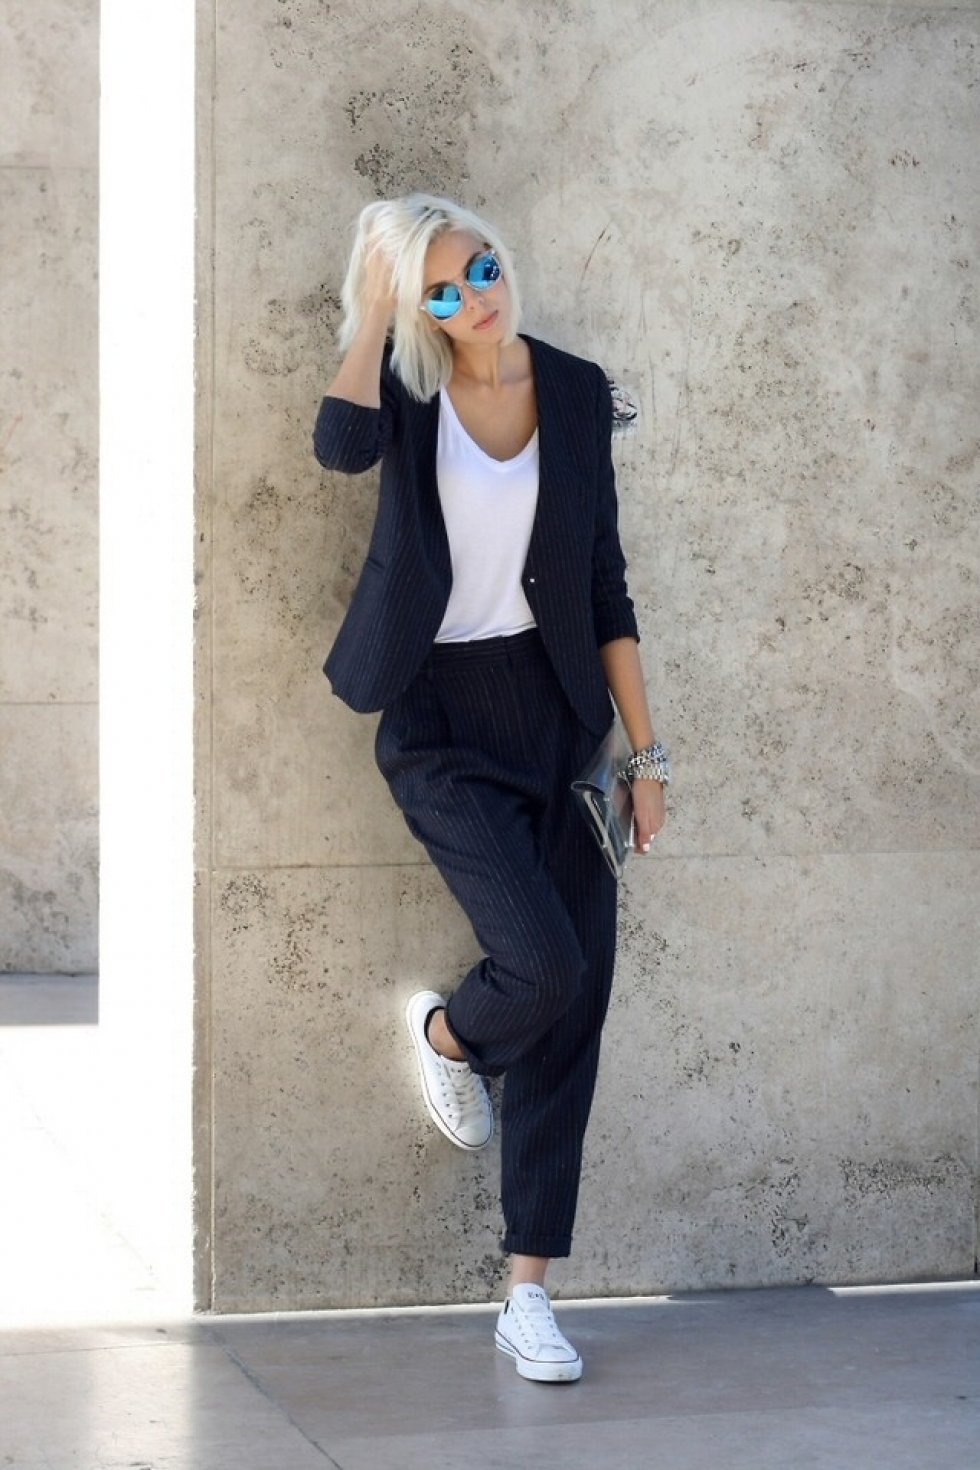 Foto: http://lookbook.nu/look/4089452-H&M-Pinstripe-Suit-Minusey-Clutch-Converse-Leather - Inspiration 2014: Suit Up